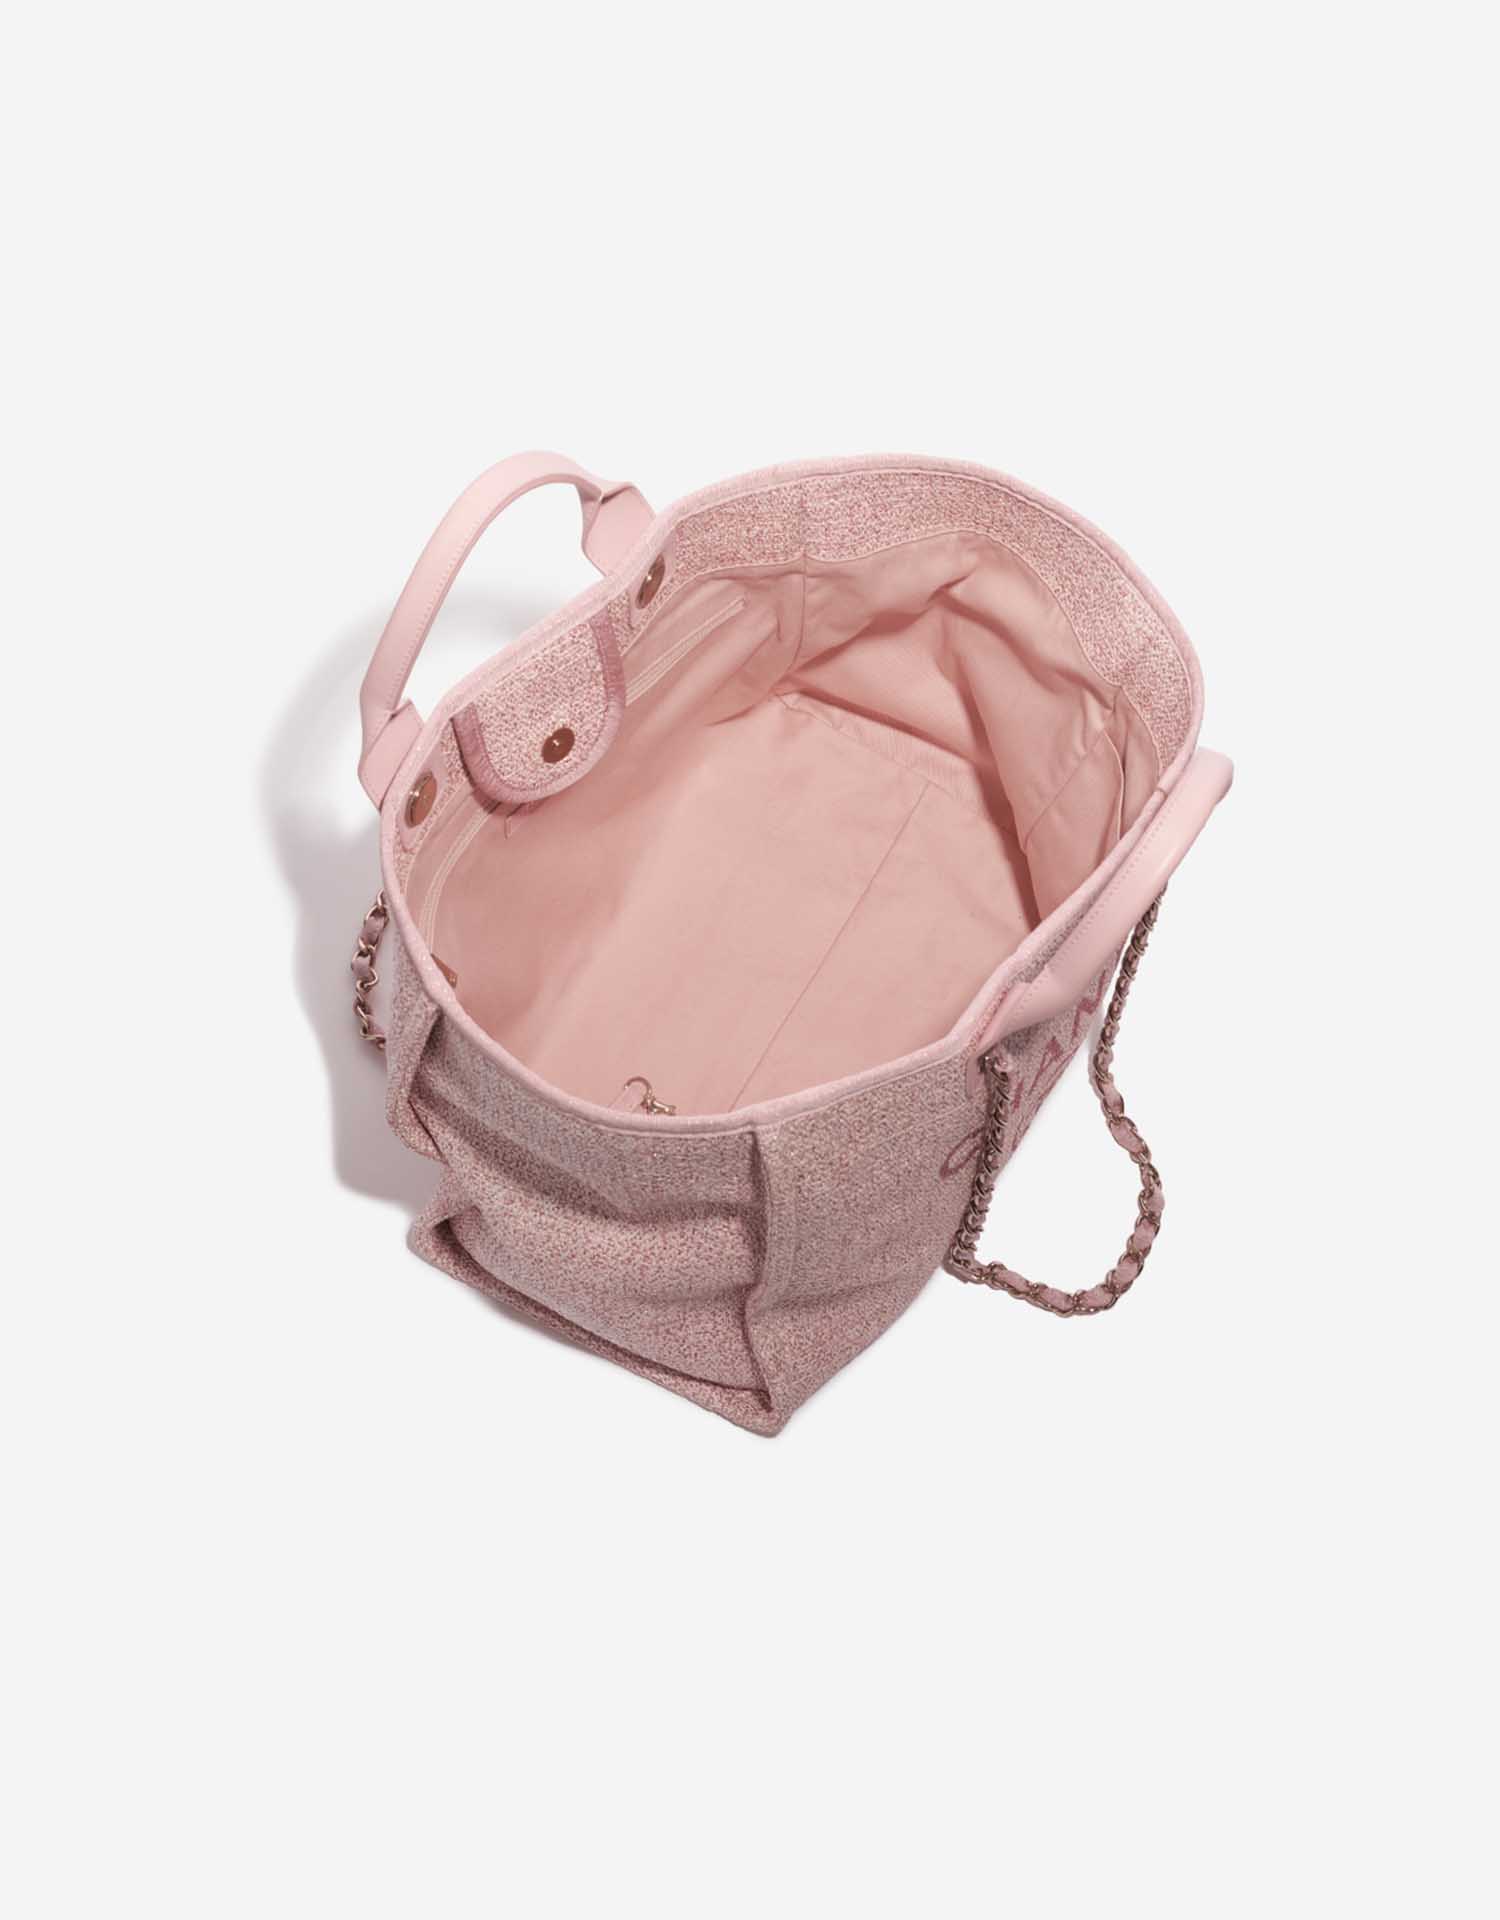 Pre-owned Chanel bag Deauville Medium Tweed Pink Pink Inside | Sell your designer bag on Saclab.com